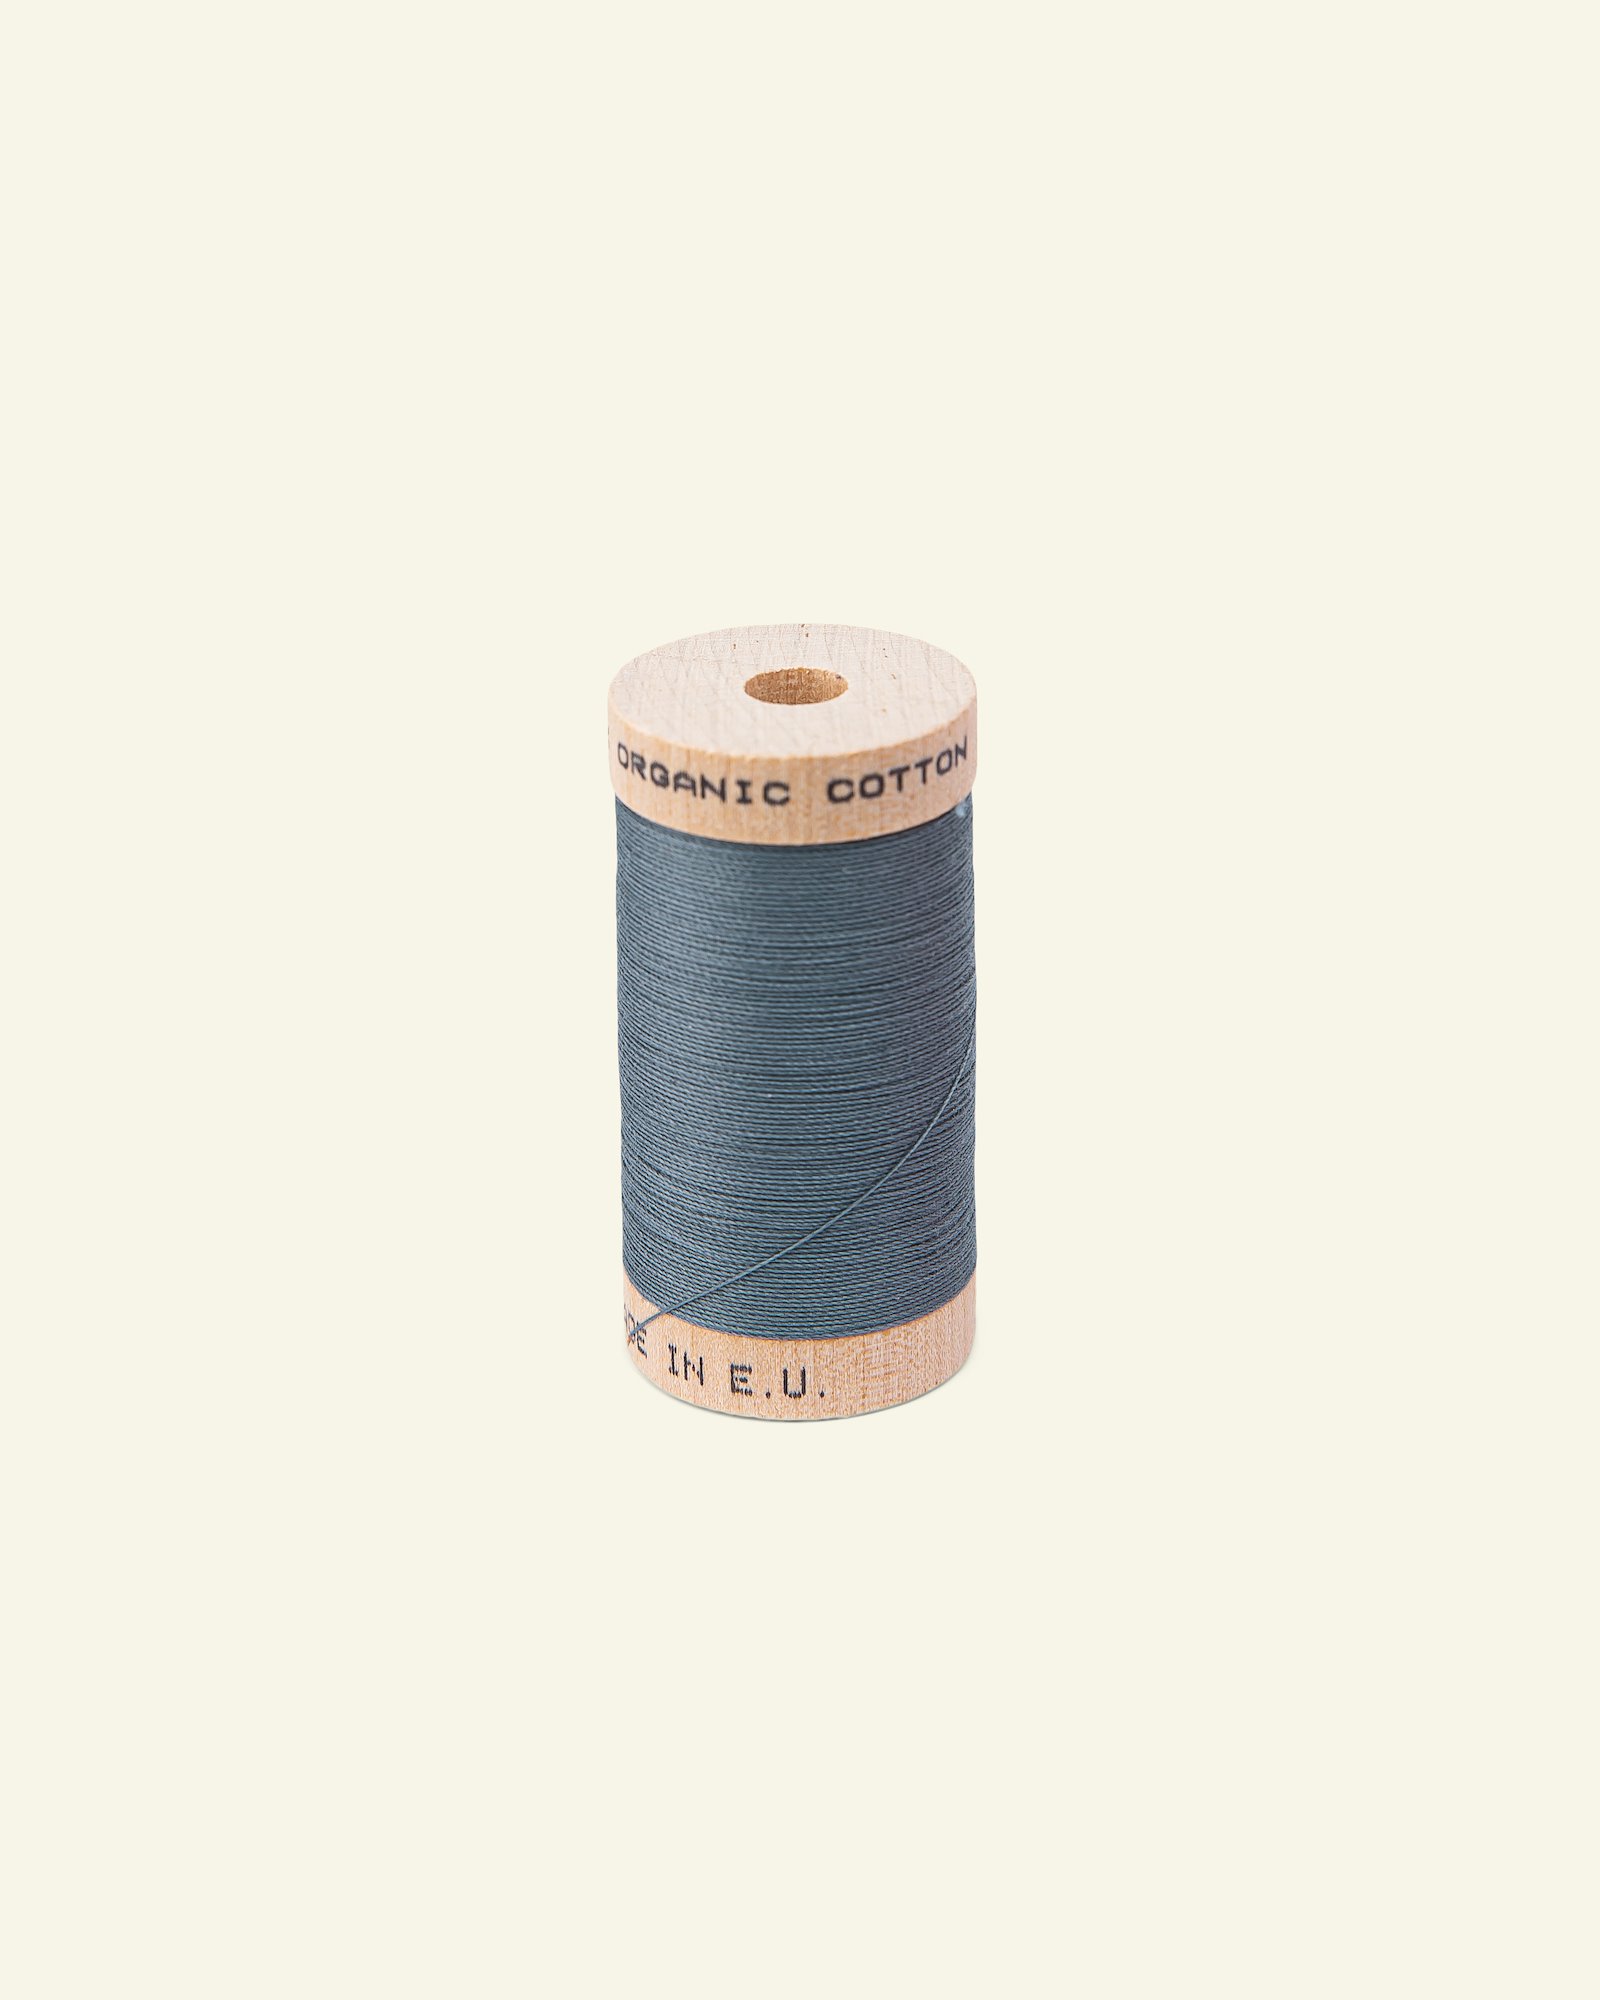 Sewing thread organic cotton blue 100m 18021_pack